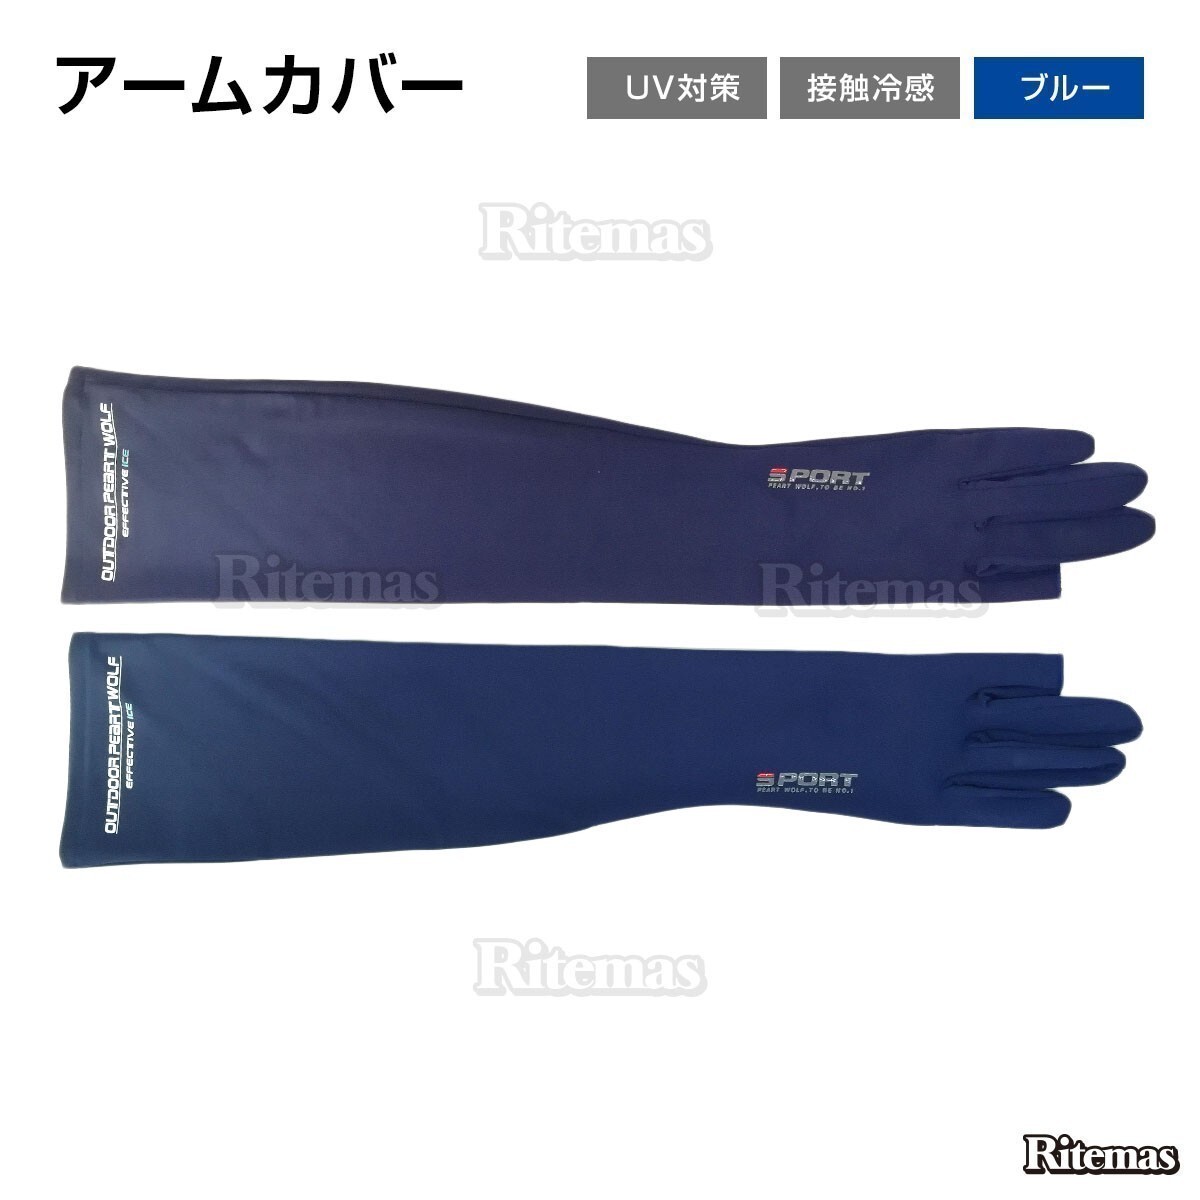 UVカット 冷感アームカバー UV対策 紫外線対策 接触冷感 腕カバー UV手袋 涼しい 夏用 手袋 運転 親指 人差し指 スマホ 滑り止め ブルーの画像1